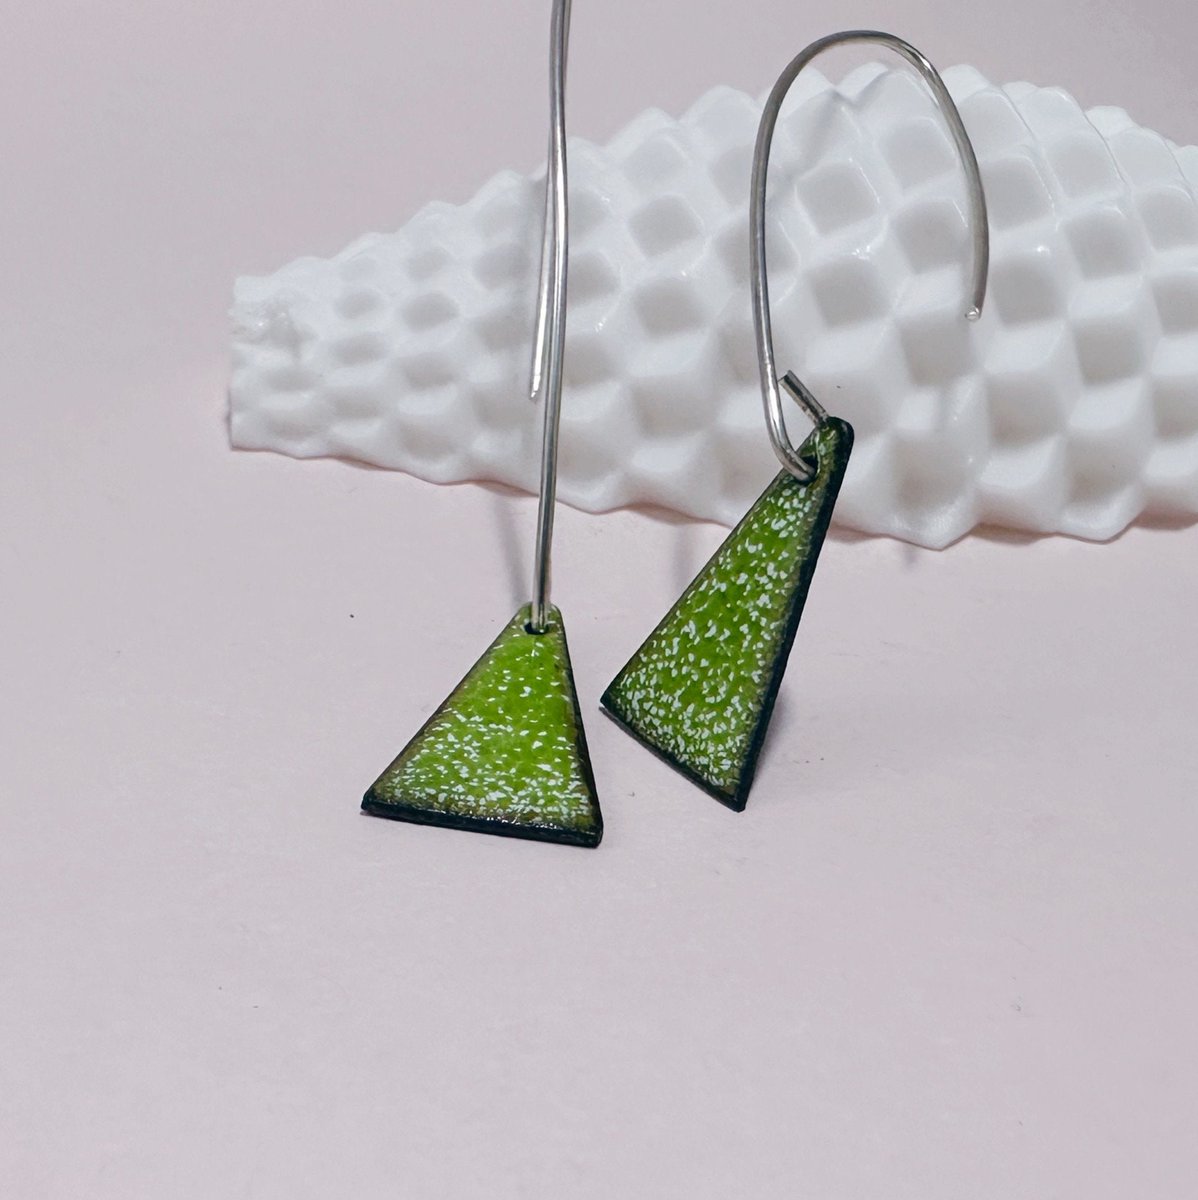 Bright Green Enamel Triangle Shaped Earrings, Geometric Drop Earrings with Silver Ear Wires tuppu.net/e8793e80 #Etsy #MHHSBD #MyNewTag #MaisyPlum #UKCraftersHour #ShopIndie #EnamelTriangle